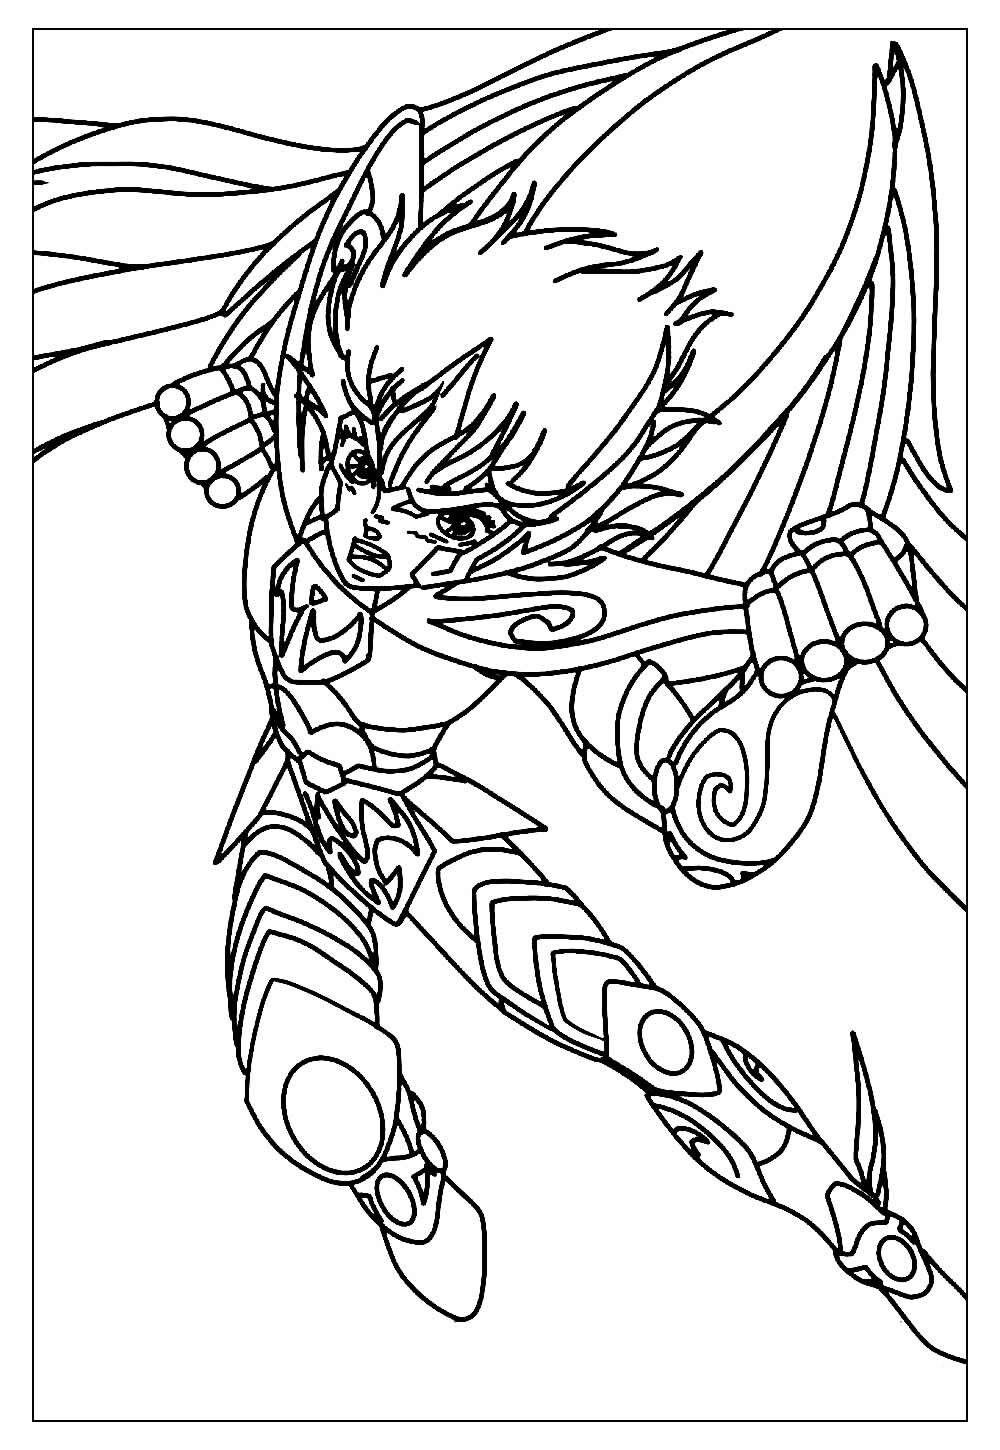 Desenhos dos Cavaleiros do Zodíaco para colorir - Seiya